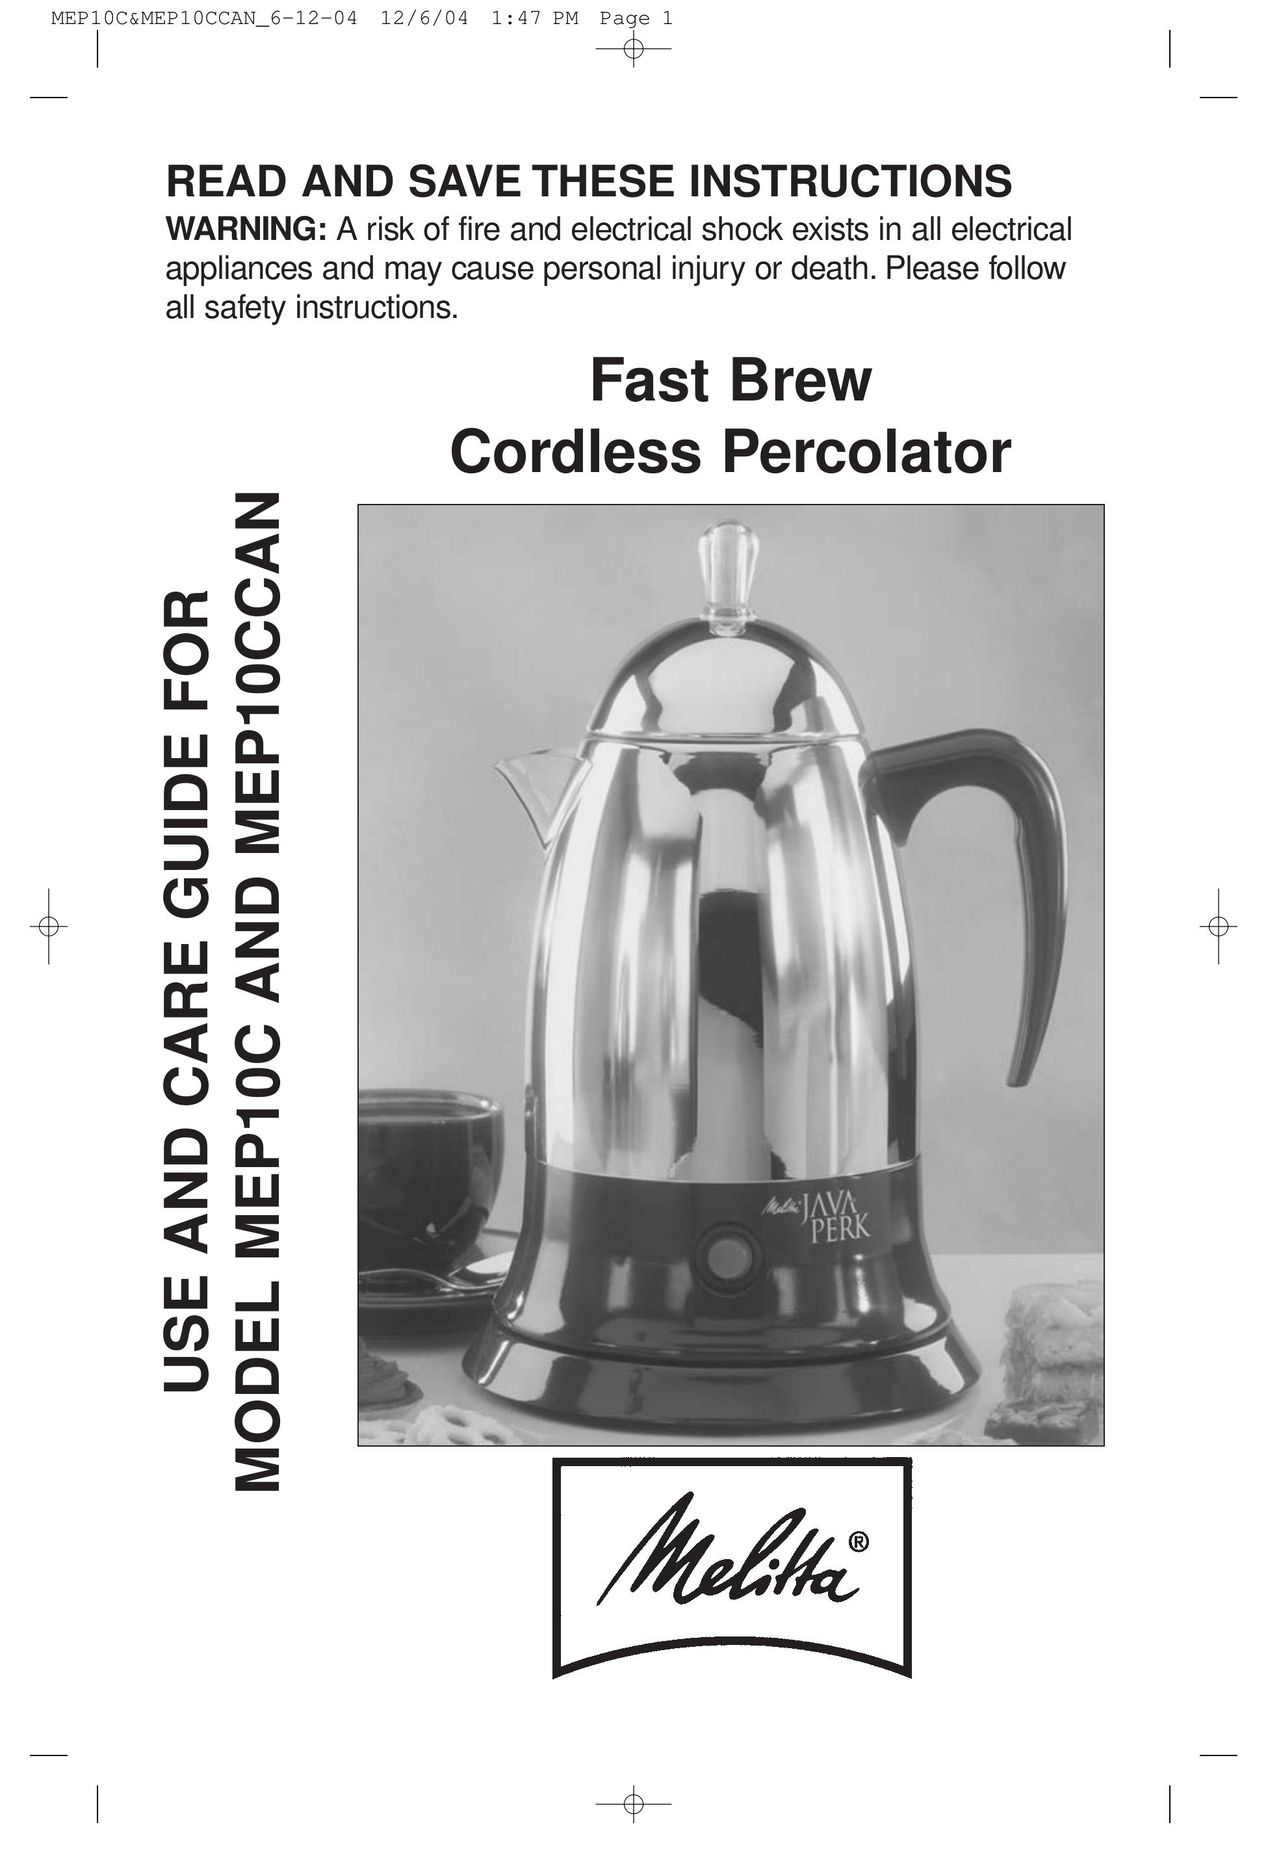 Toastmaster MEP10CCAN Coffeemaker User Manual